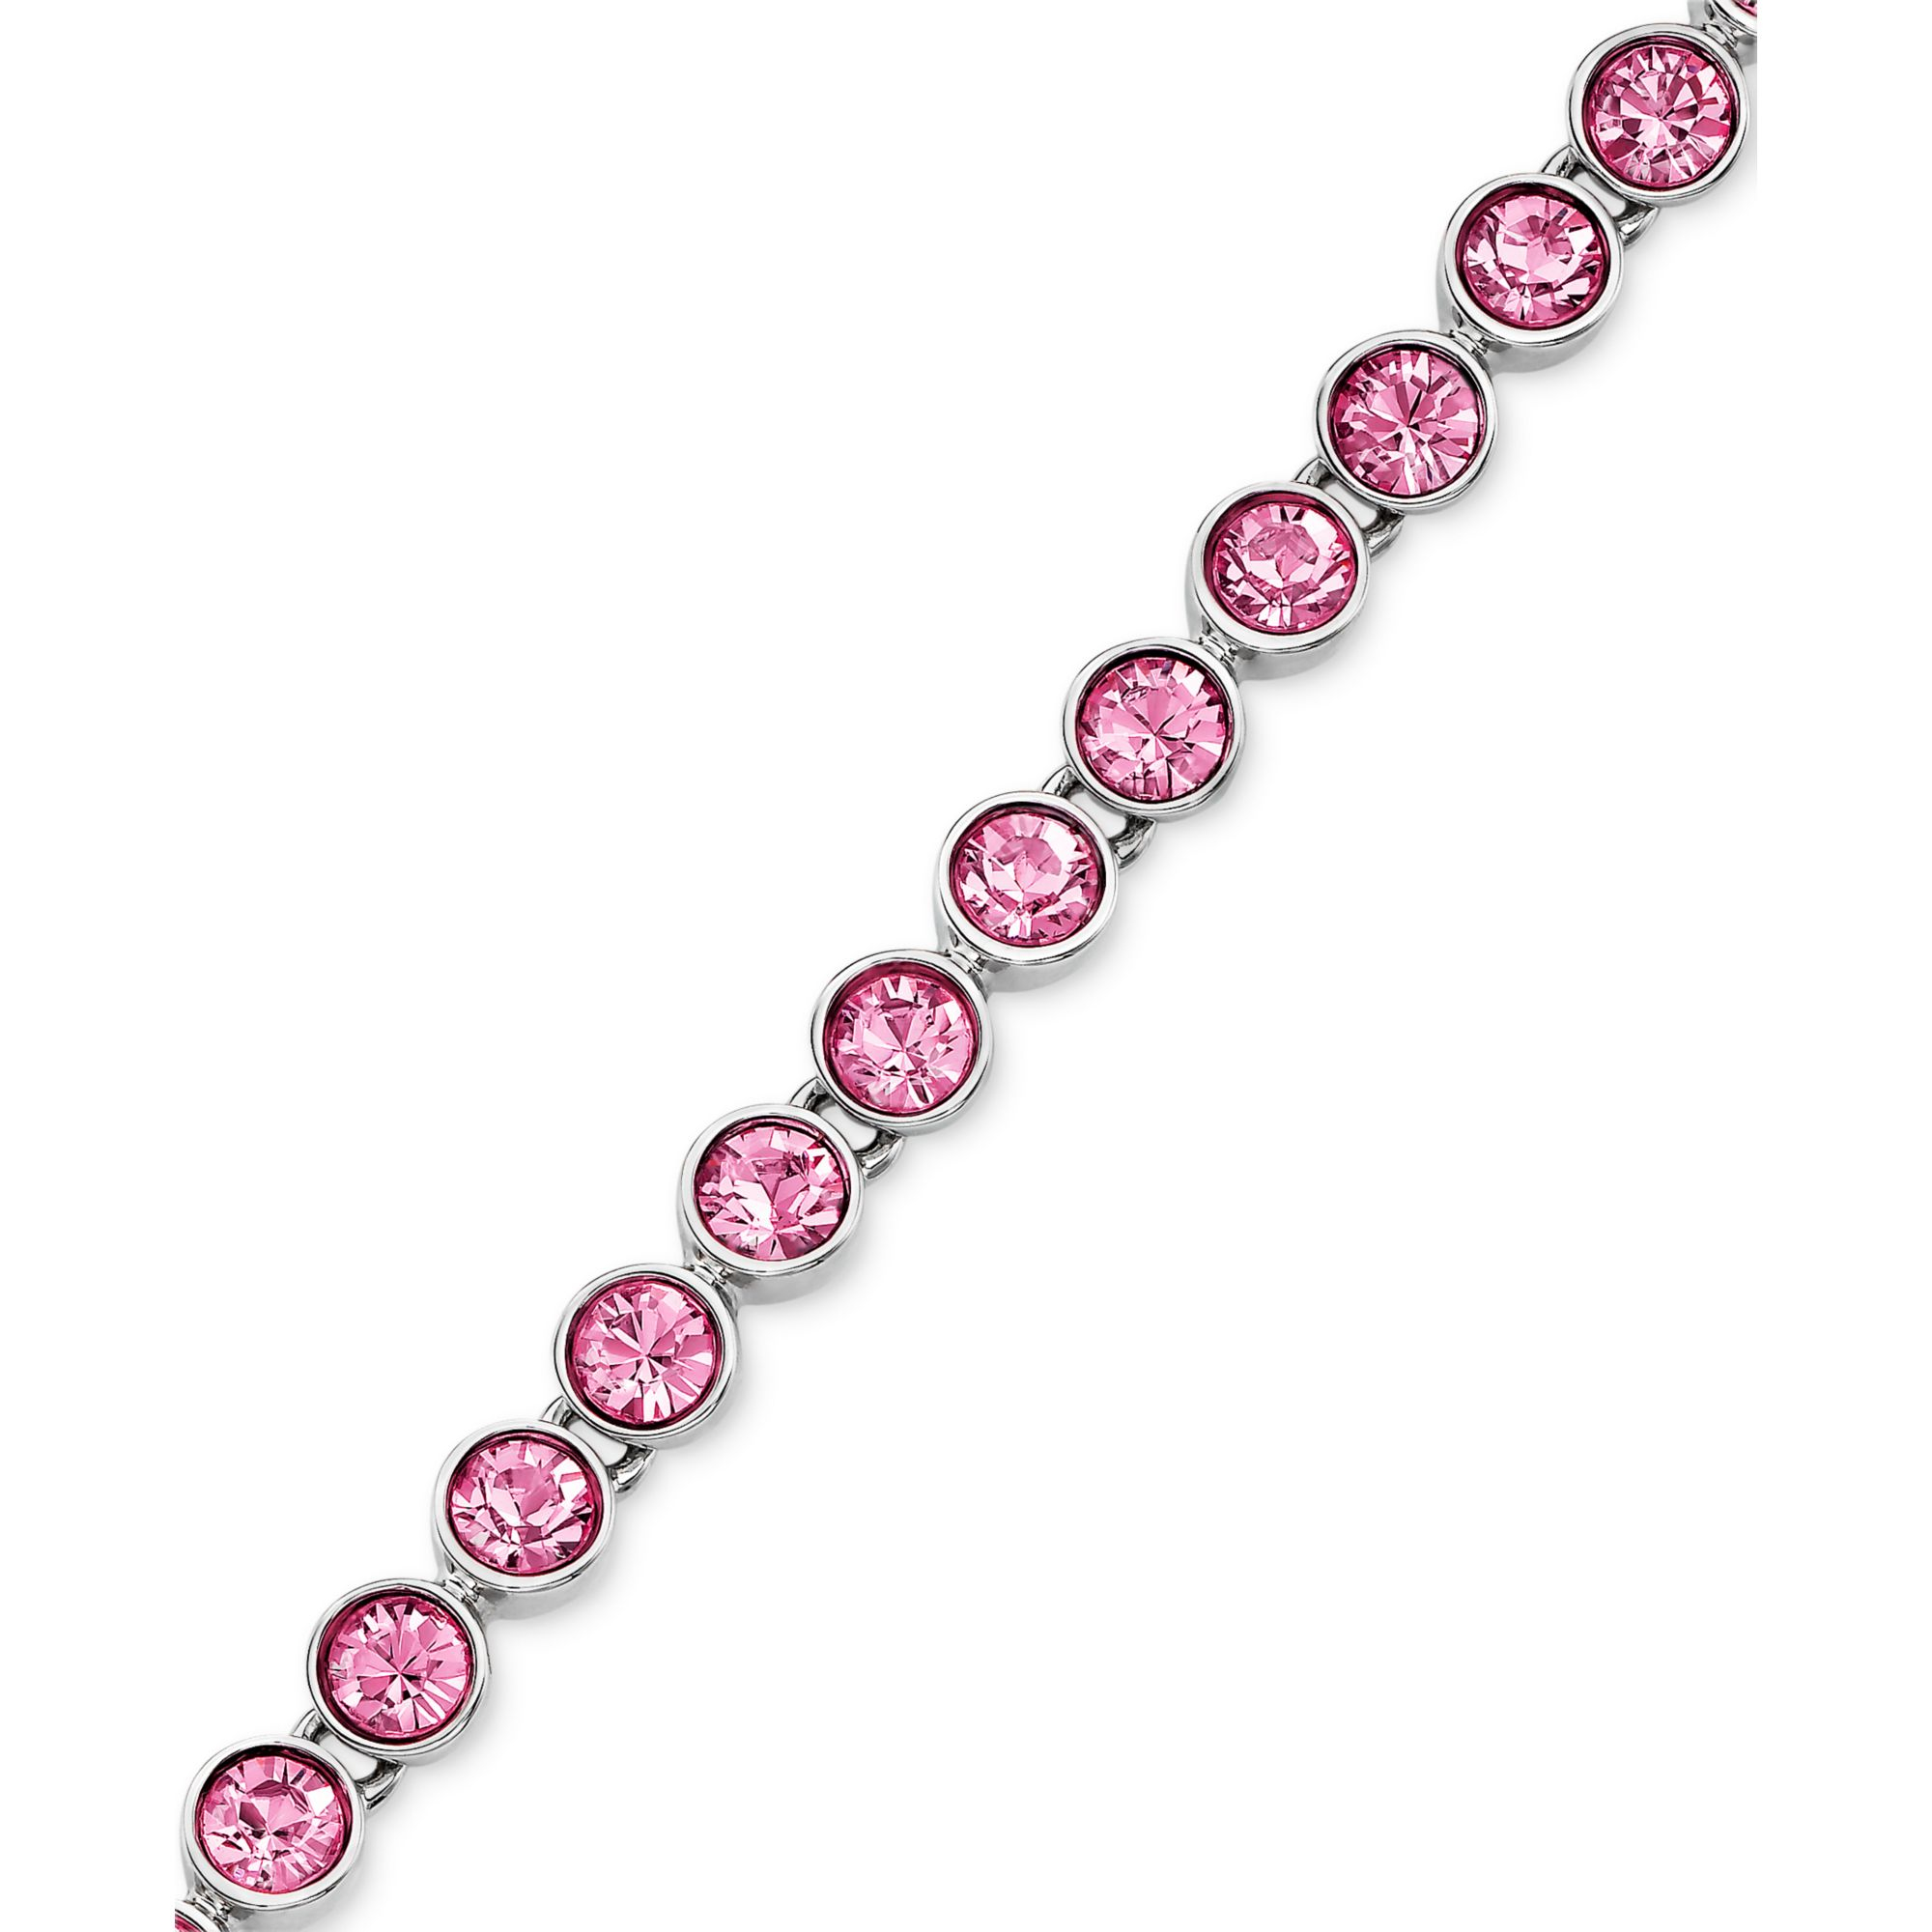 Natural Australia Opal Bracelet 24pieces 4x4mm Gemstone 925 Sterling Silver  For Women Anniversary Gift - Bracelets - AliExpress